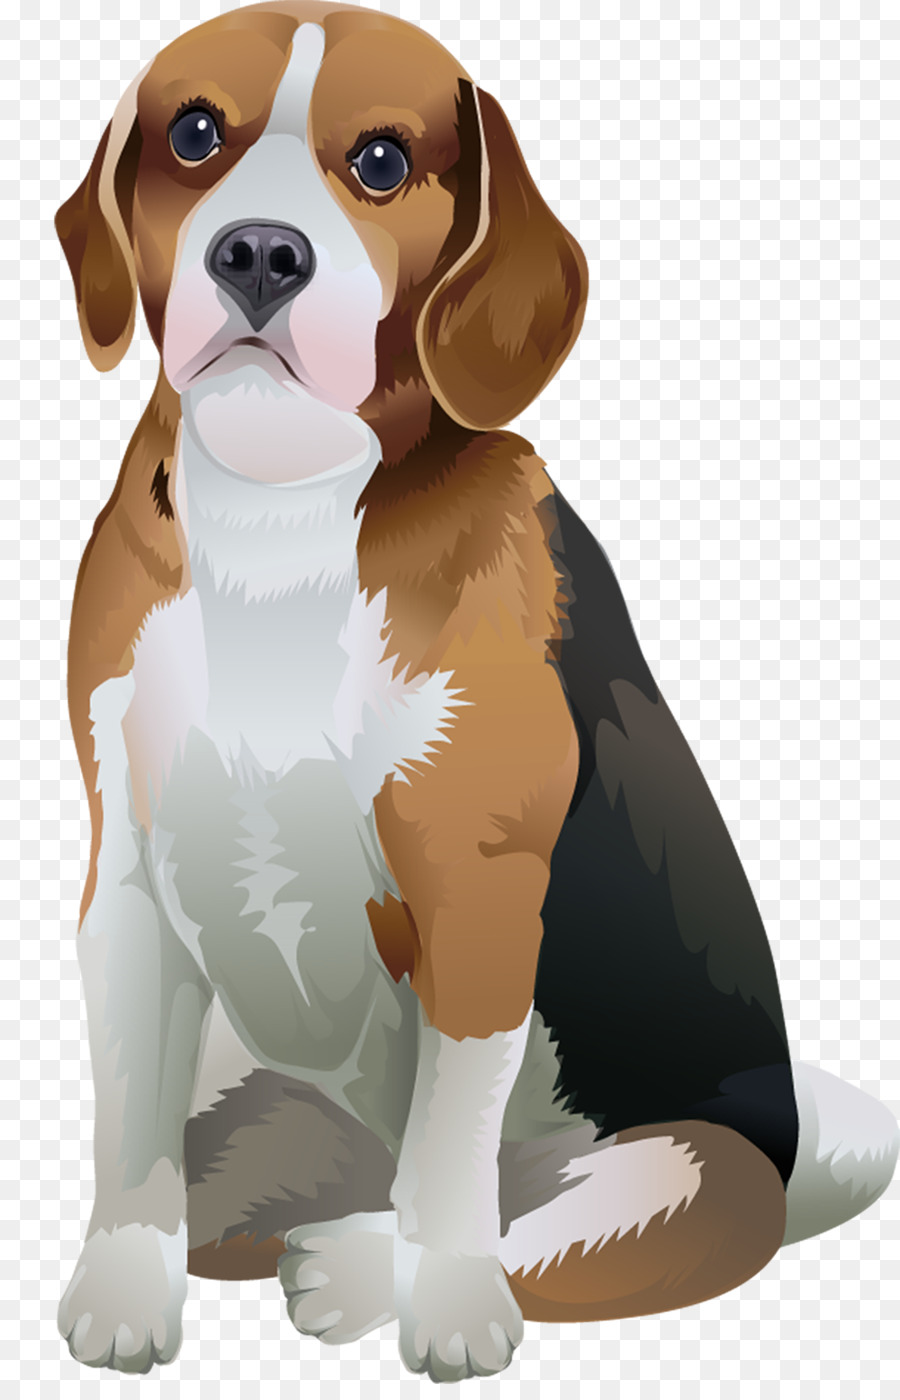 Dog Cartoon Png Download 1000 1538 Free Transparent Beagle Png Download Cleanpng Kisspng